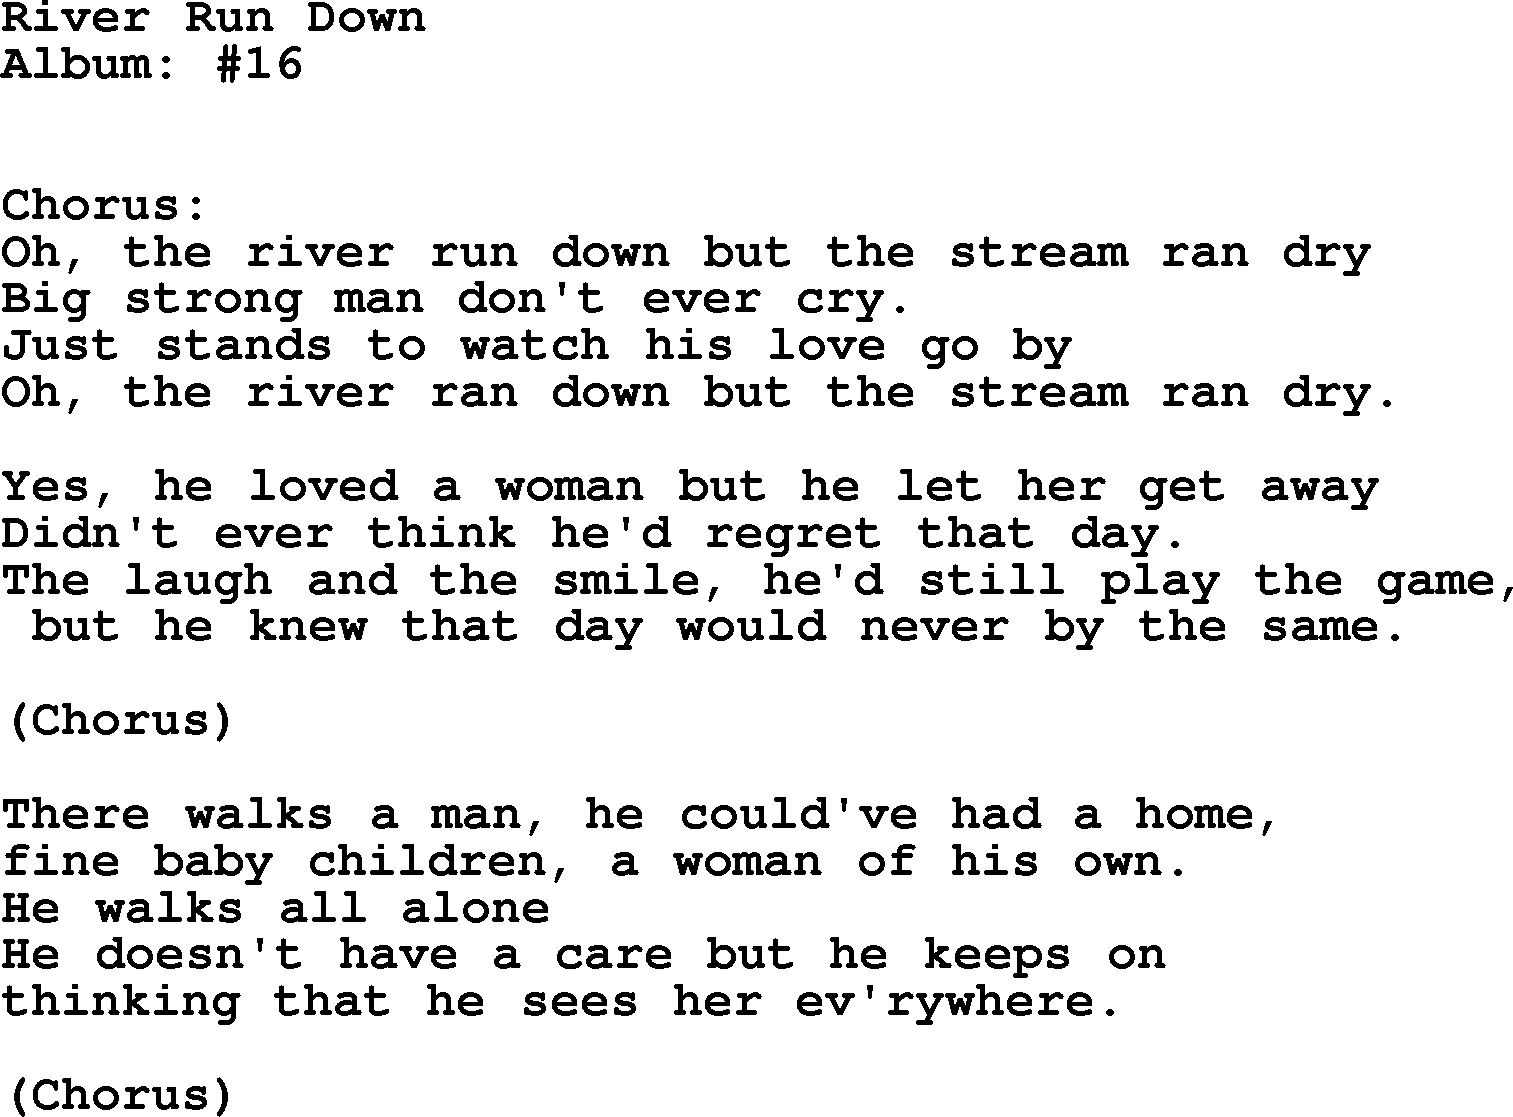 Kingston Trio song River Run Down, lyrics